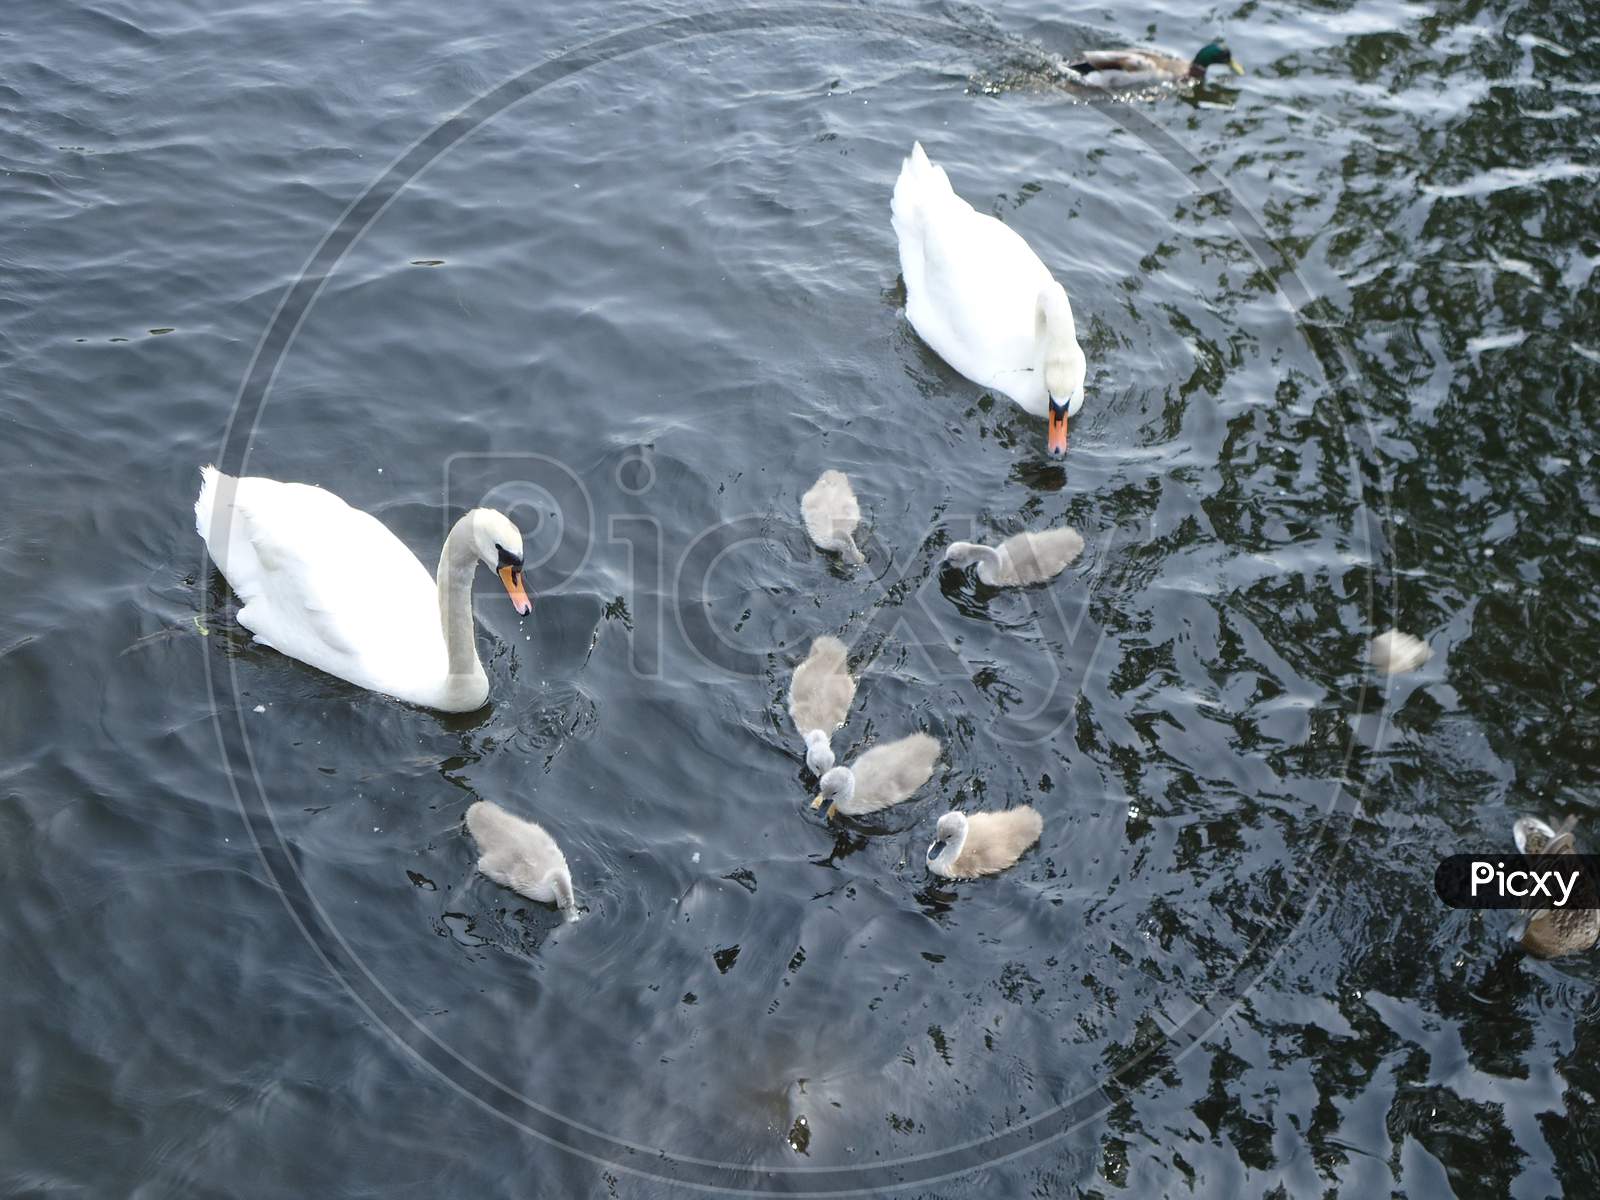 Swan Family Including Little Swans Walking On Water.